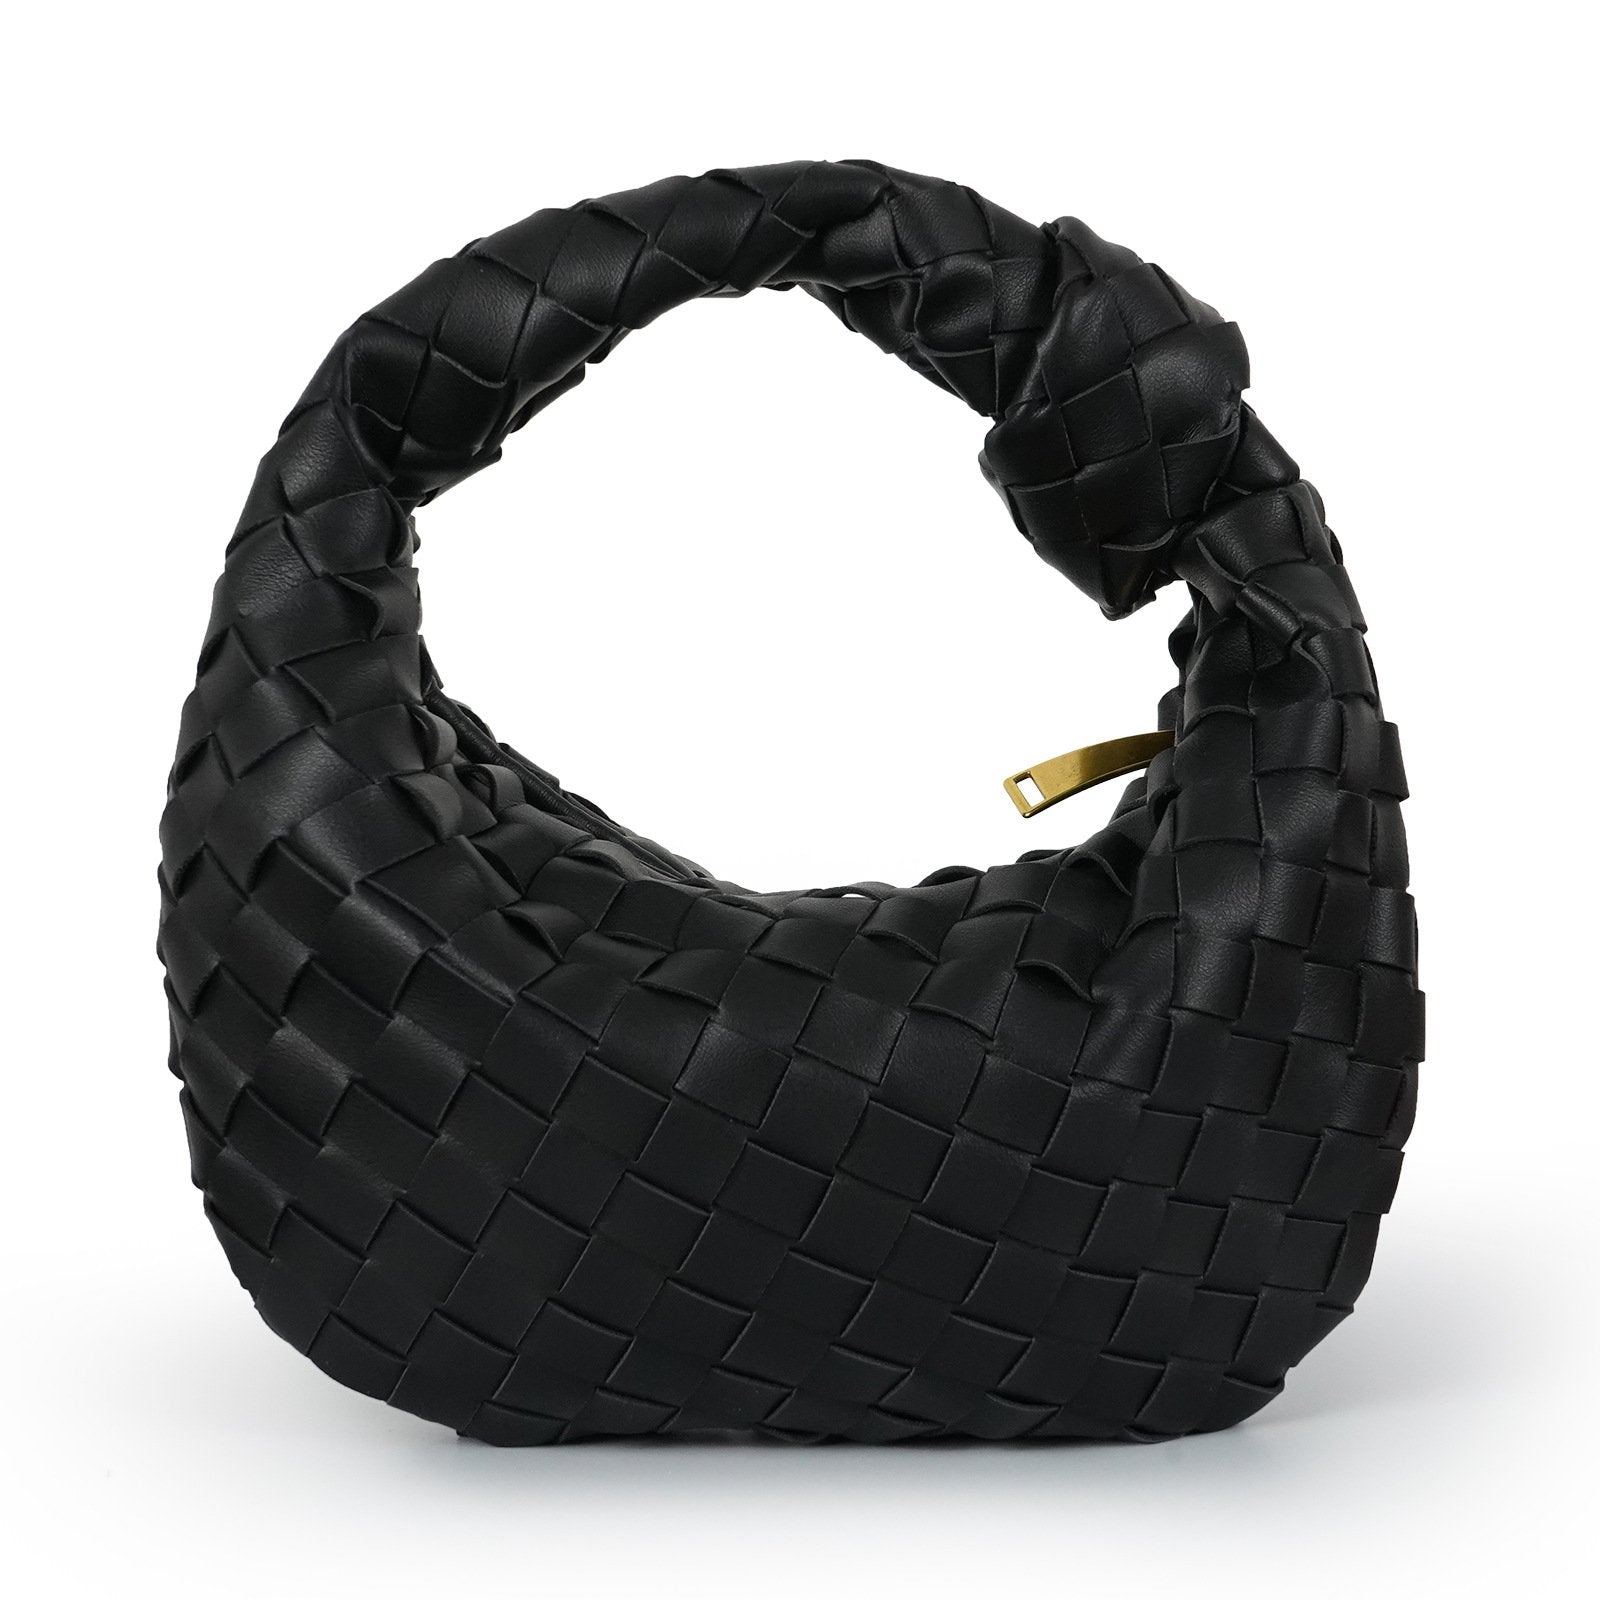 Fine beautiful woven design bag sense hand knotted woven bag